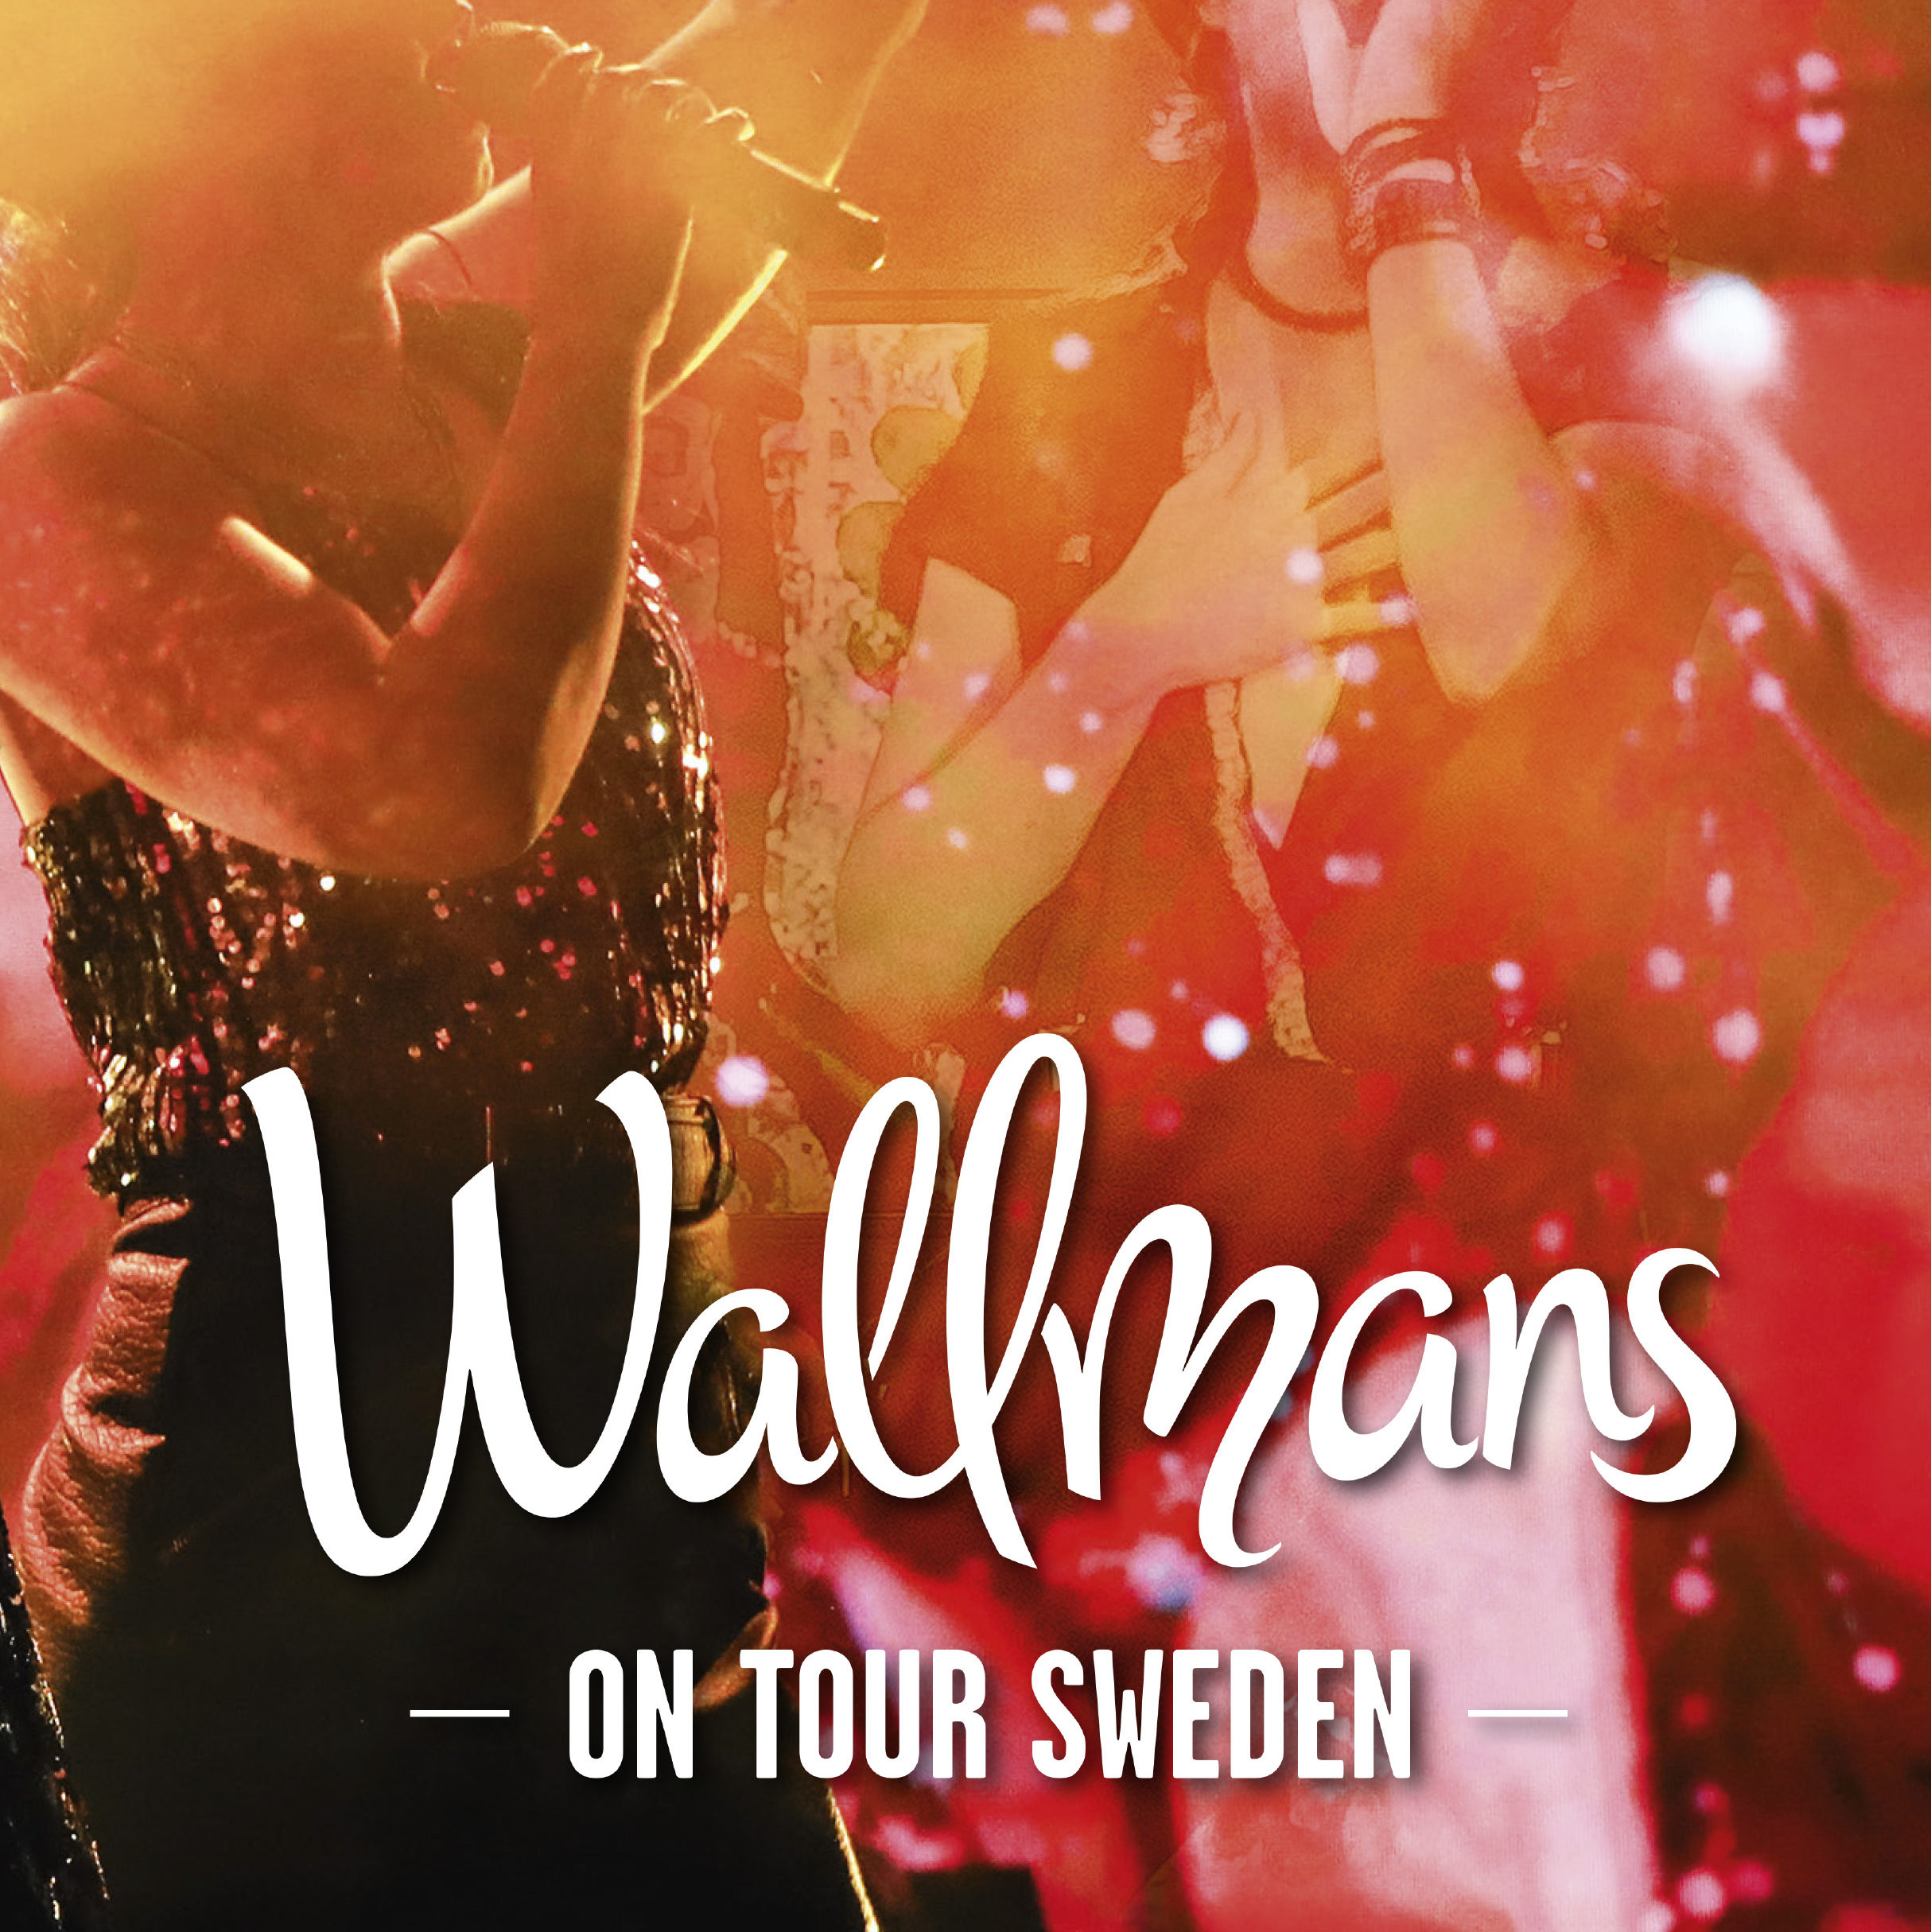 wallmans on tour sweden